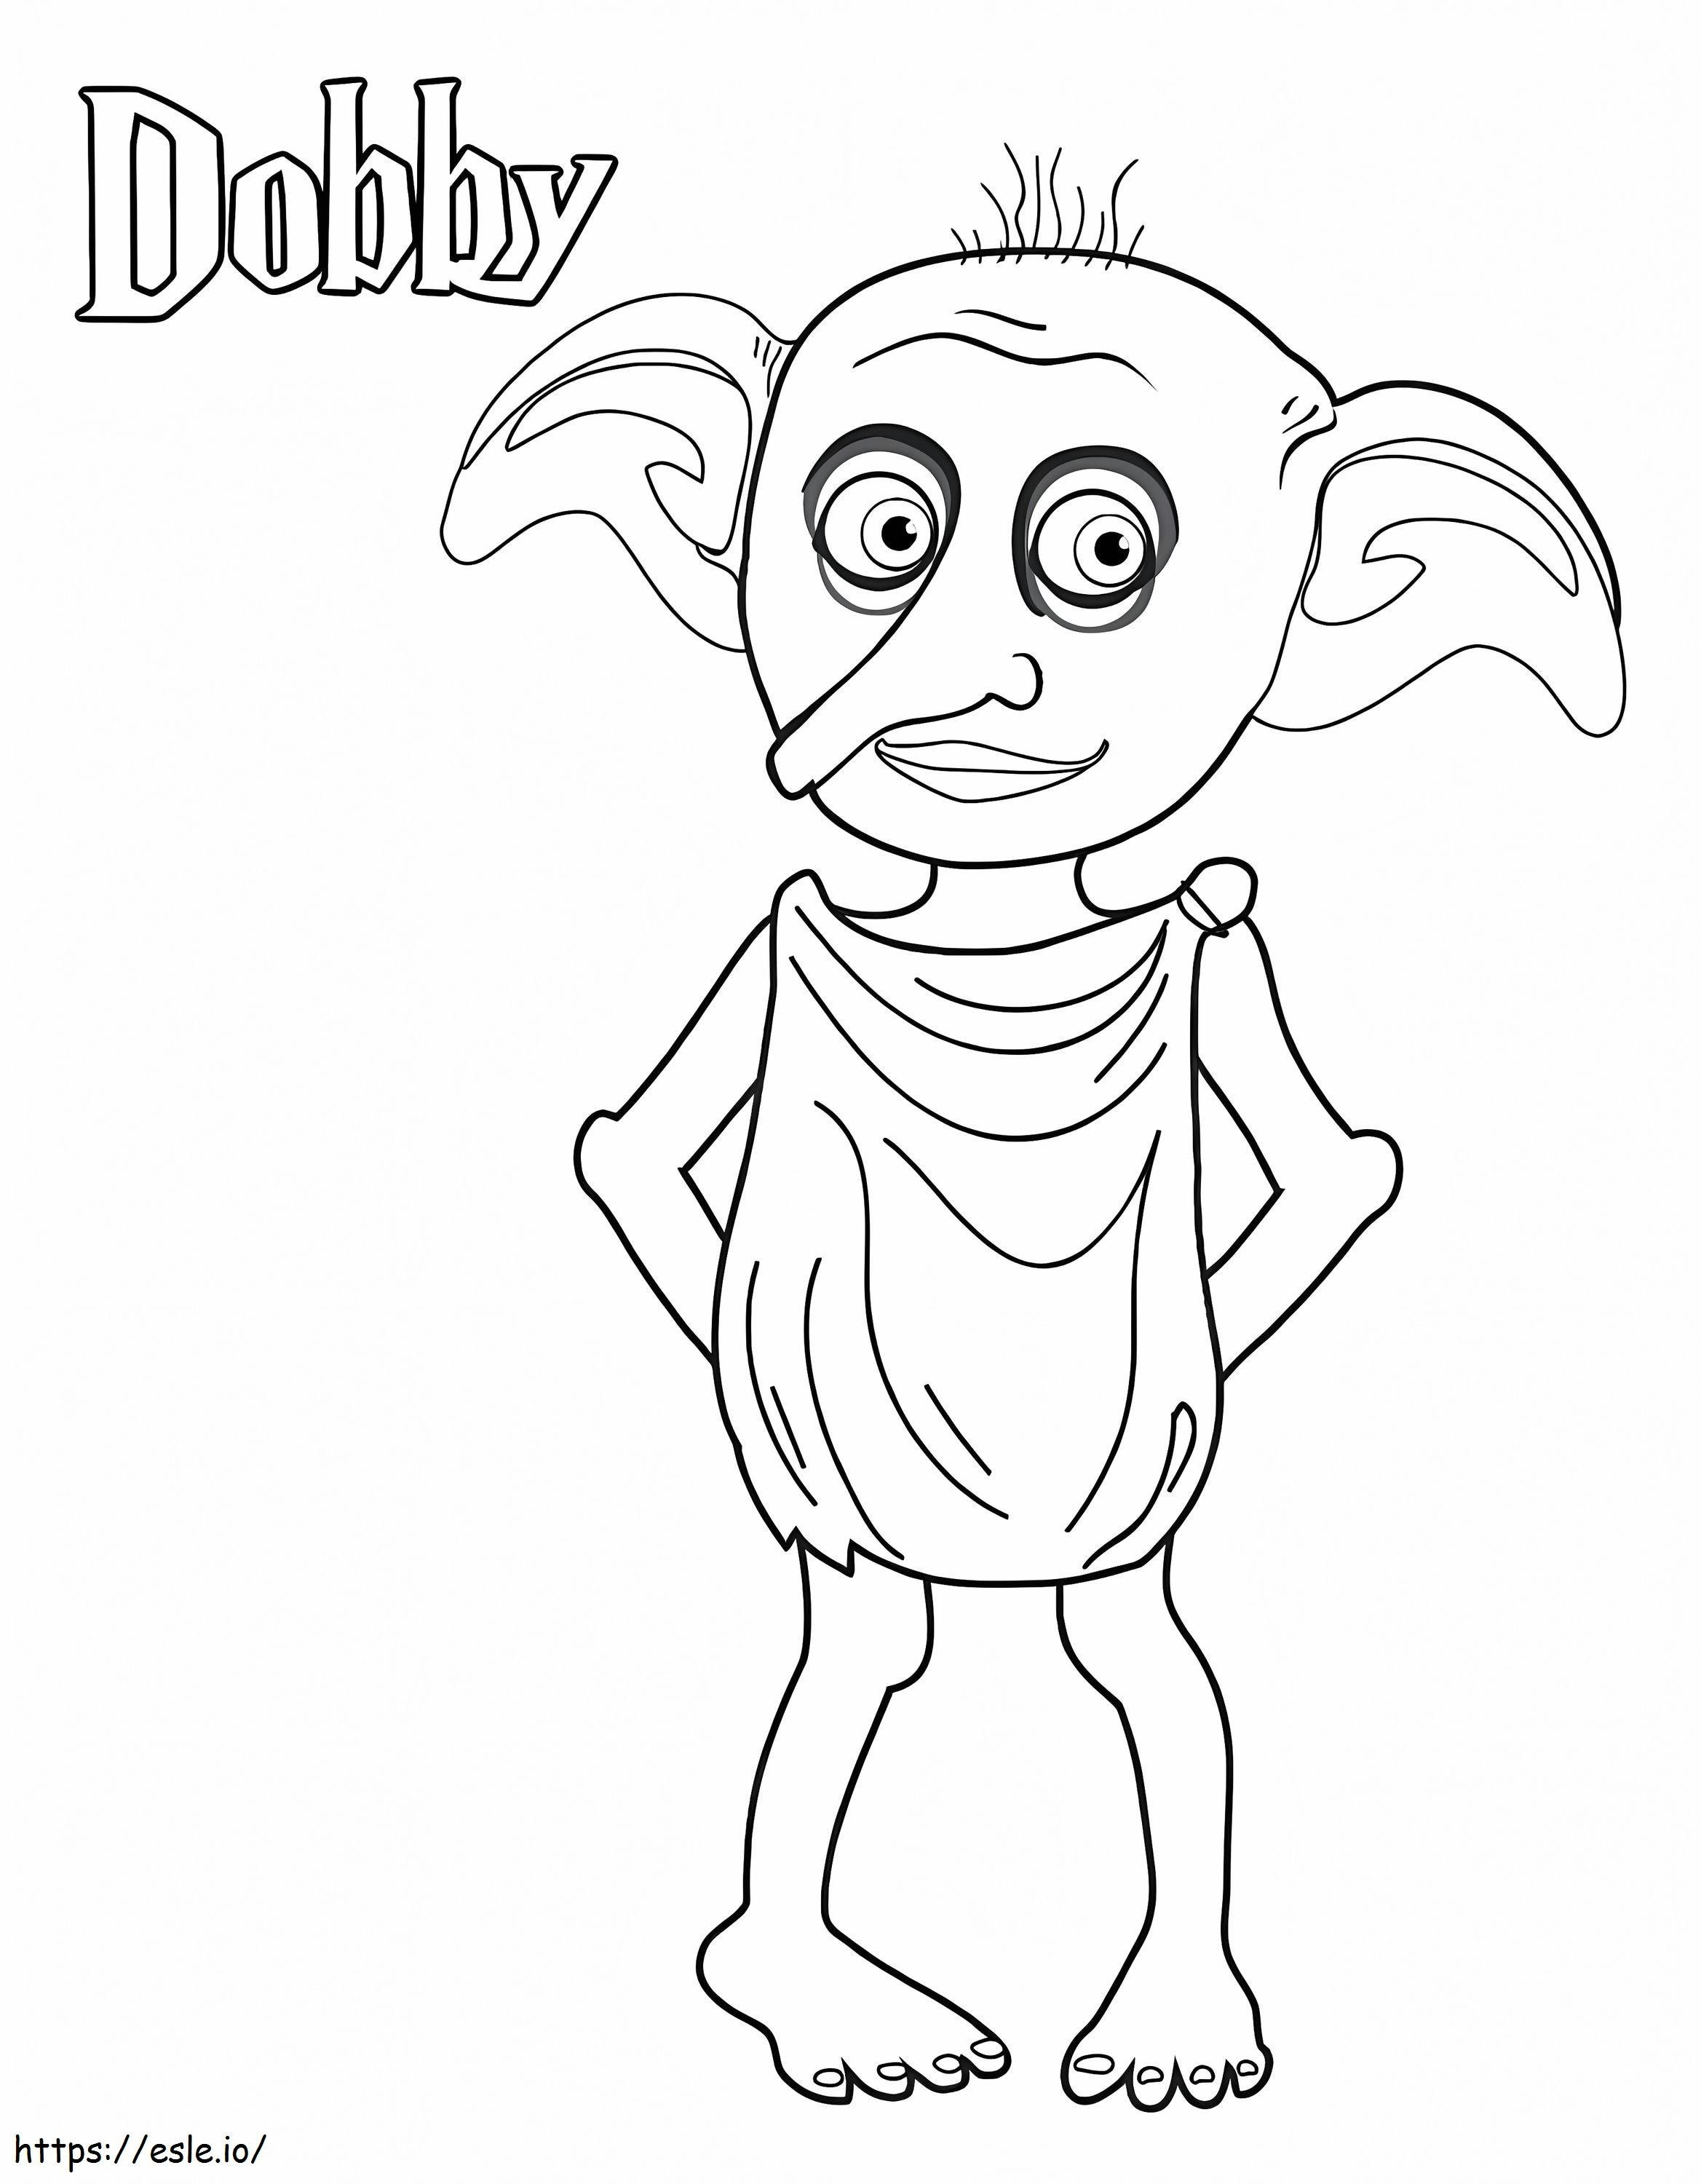 Dobby 1 para colorir